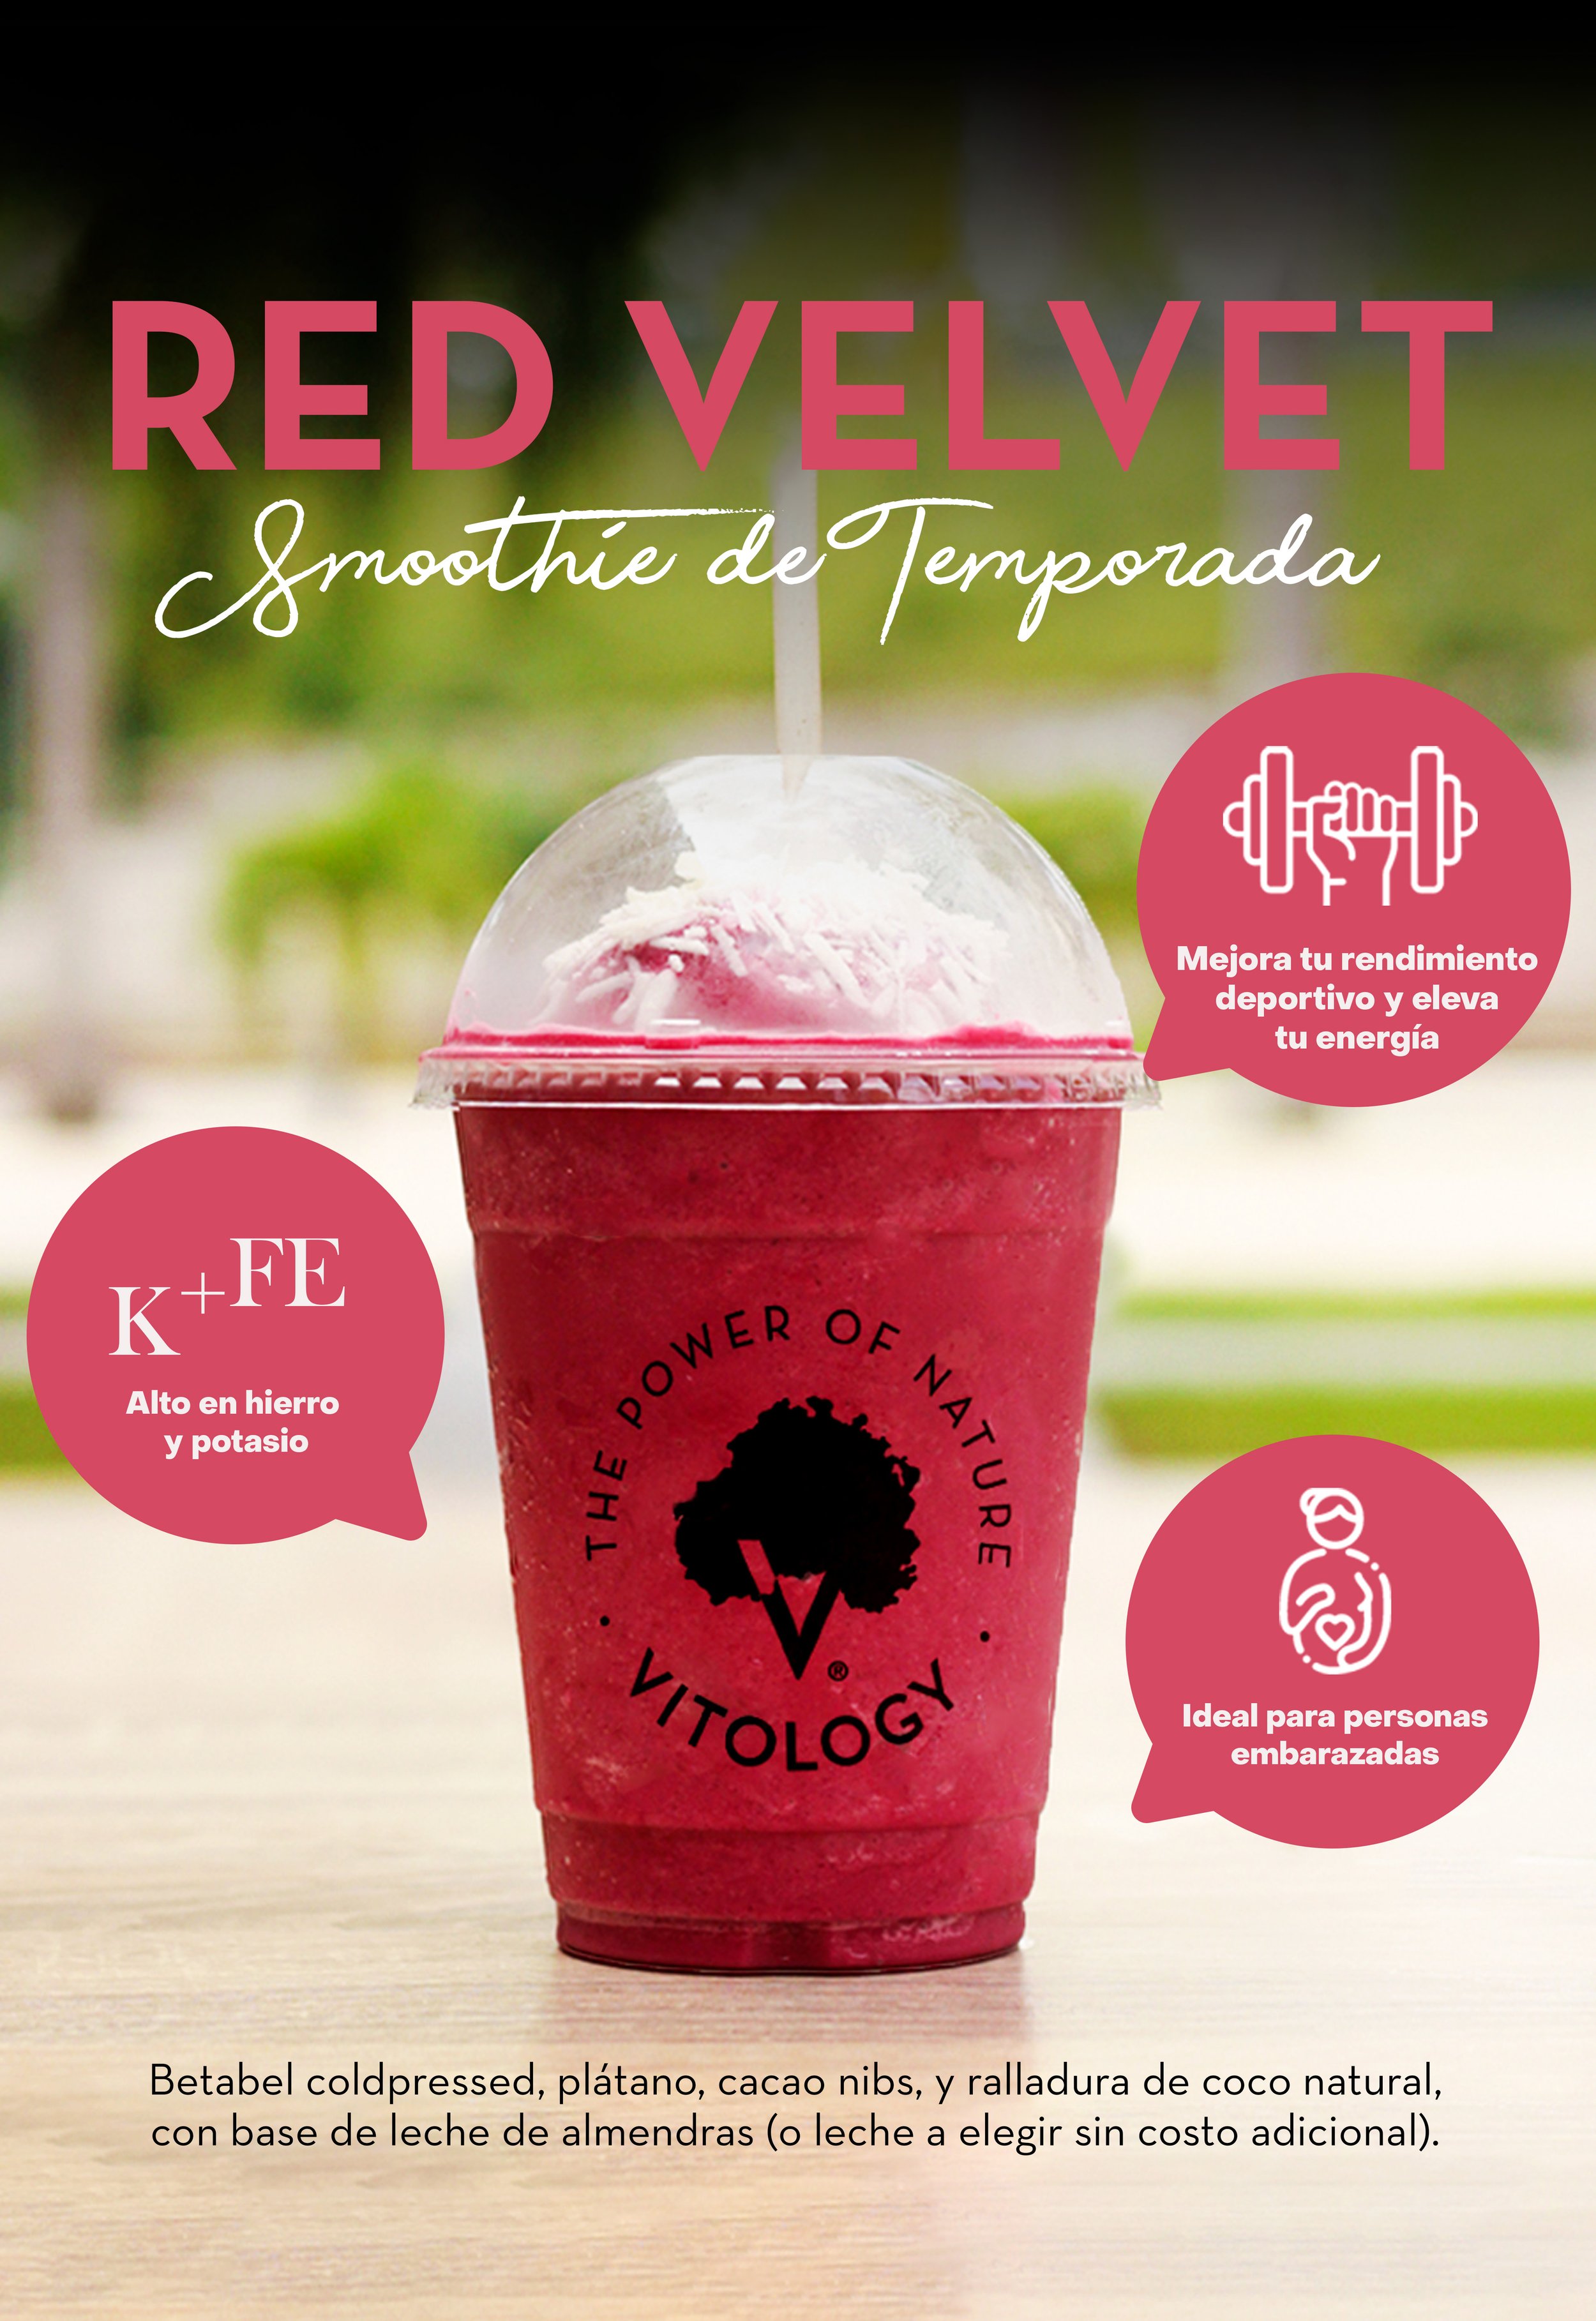 Red Velvet smoothie de temporada poster vertical 33 x 48 cms.jpg